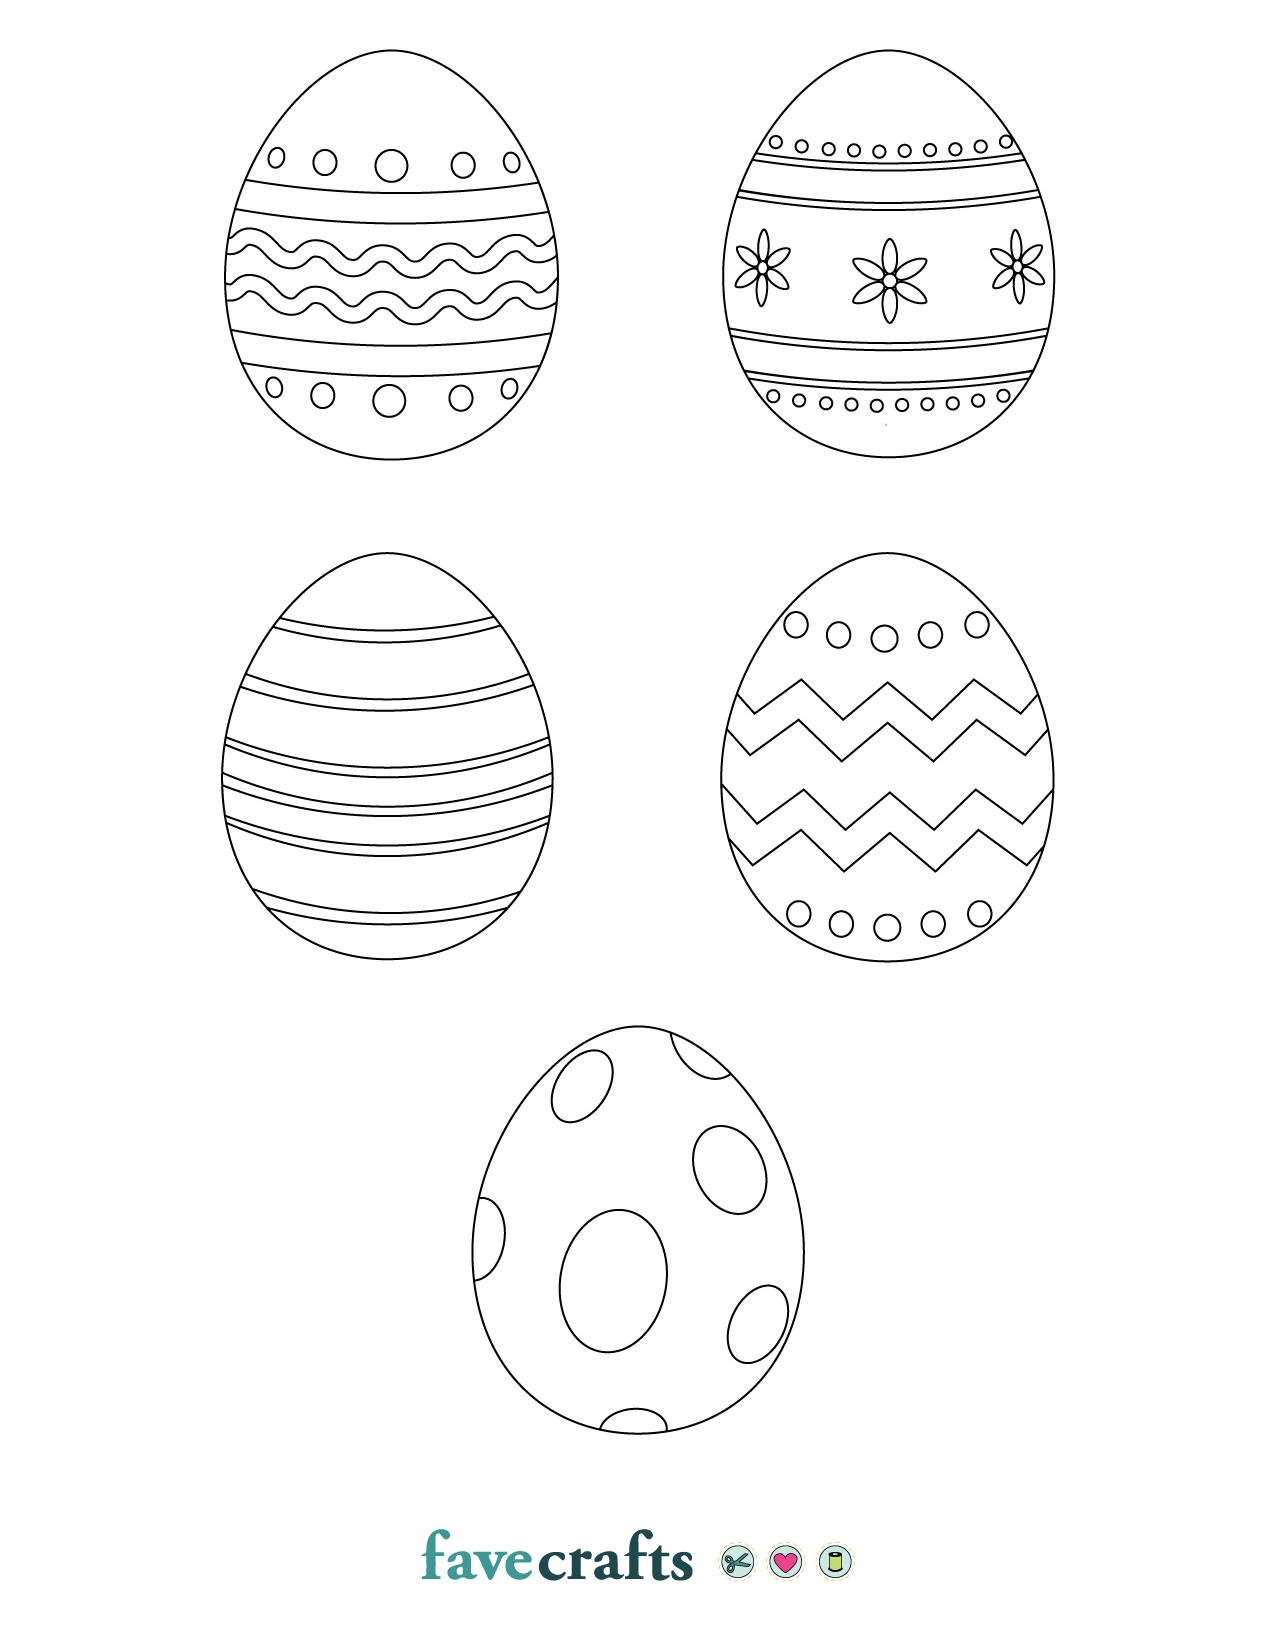 Printable Easter Eggs Free Download | FaveCrafts.com